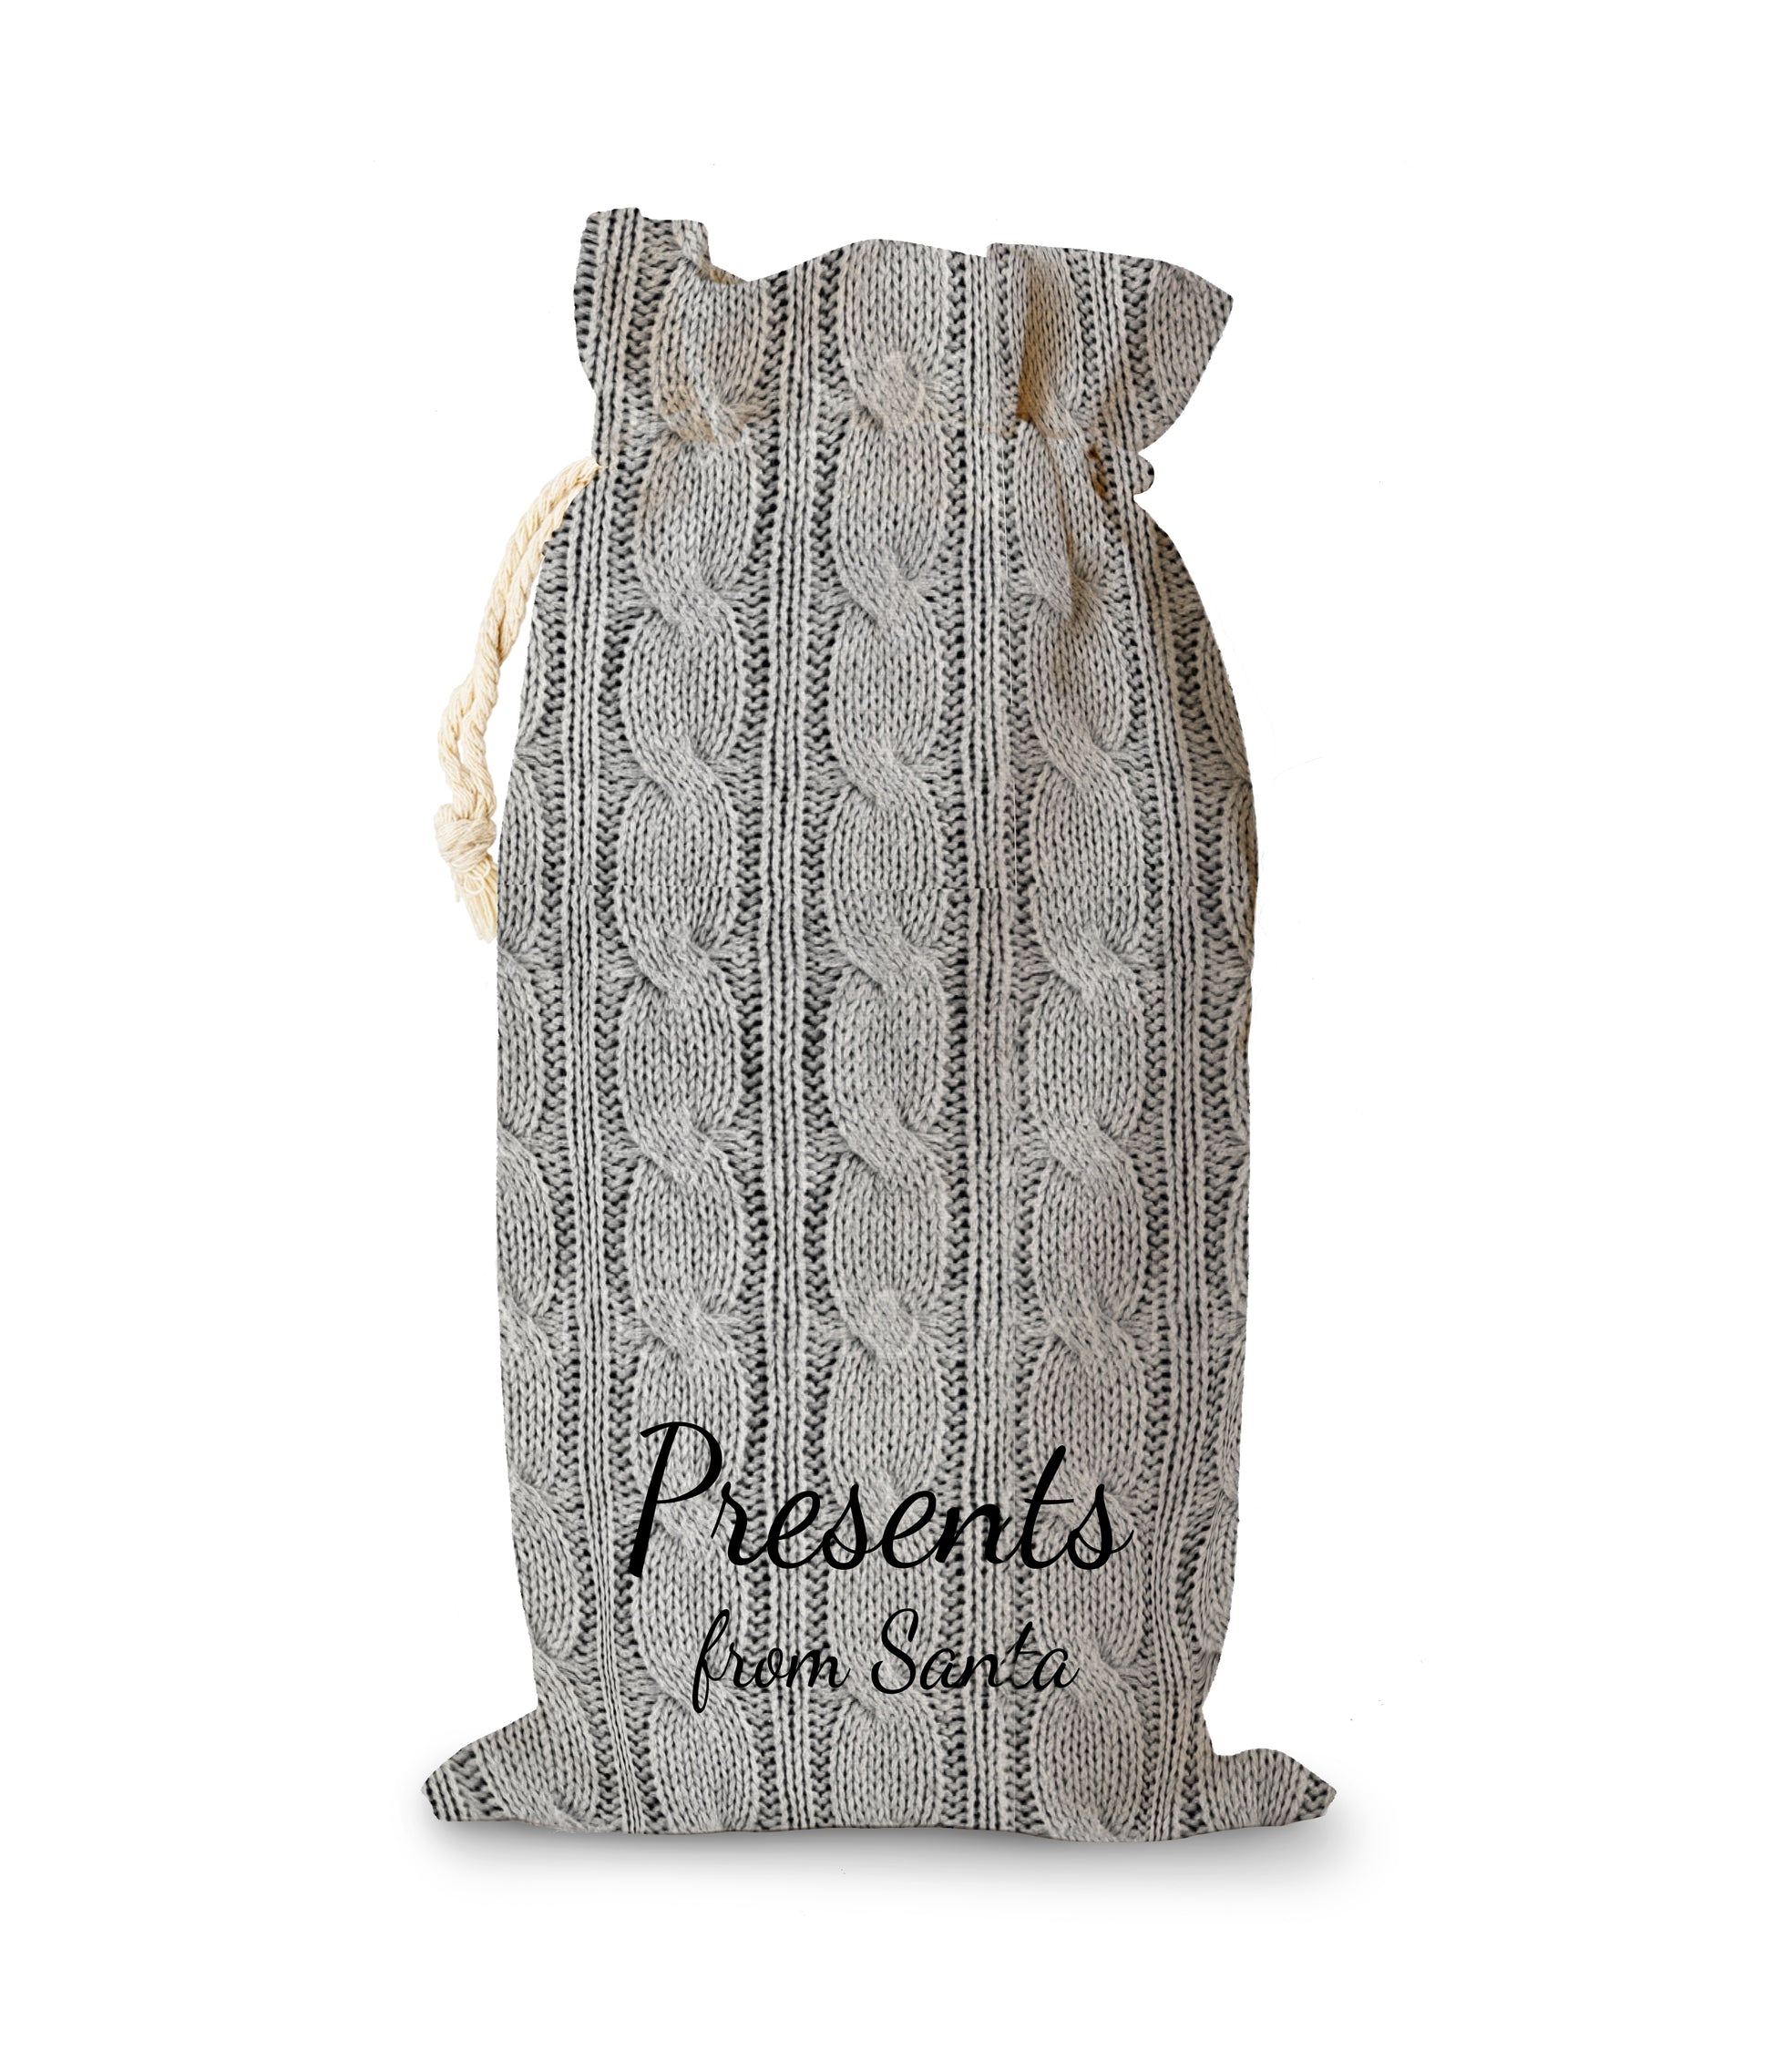 Personalised Grey Fabric Sack. Santa Sack. Personalised Text is "Presents from Santa"